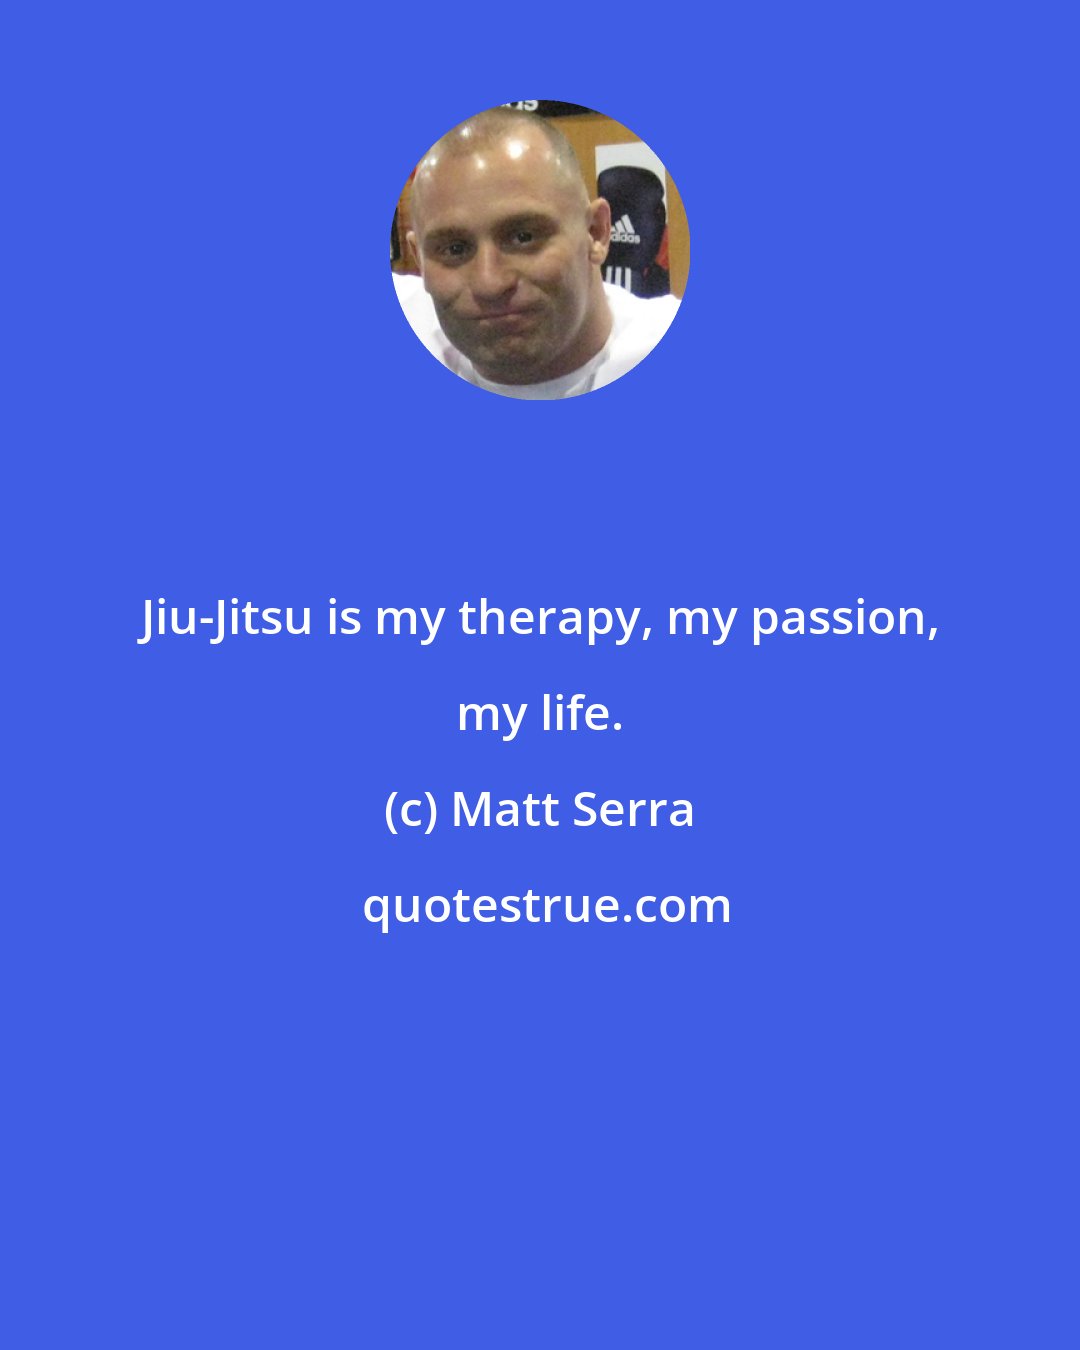 Matt Serra: Jiu-Jitsu is my therapy, my passion, my life.